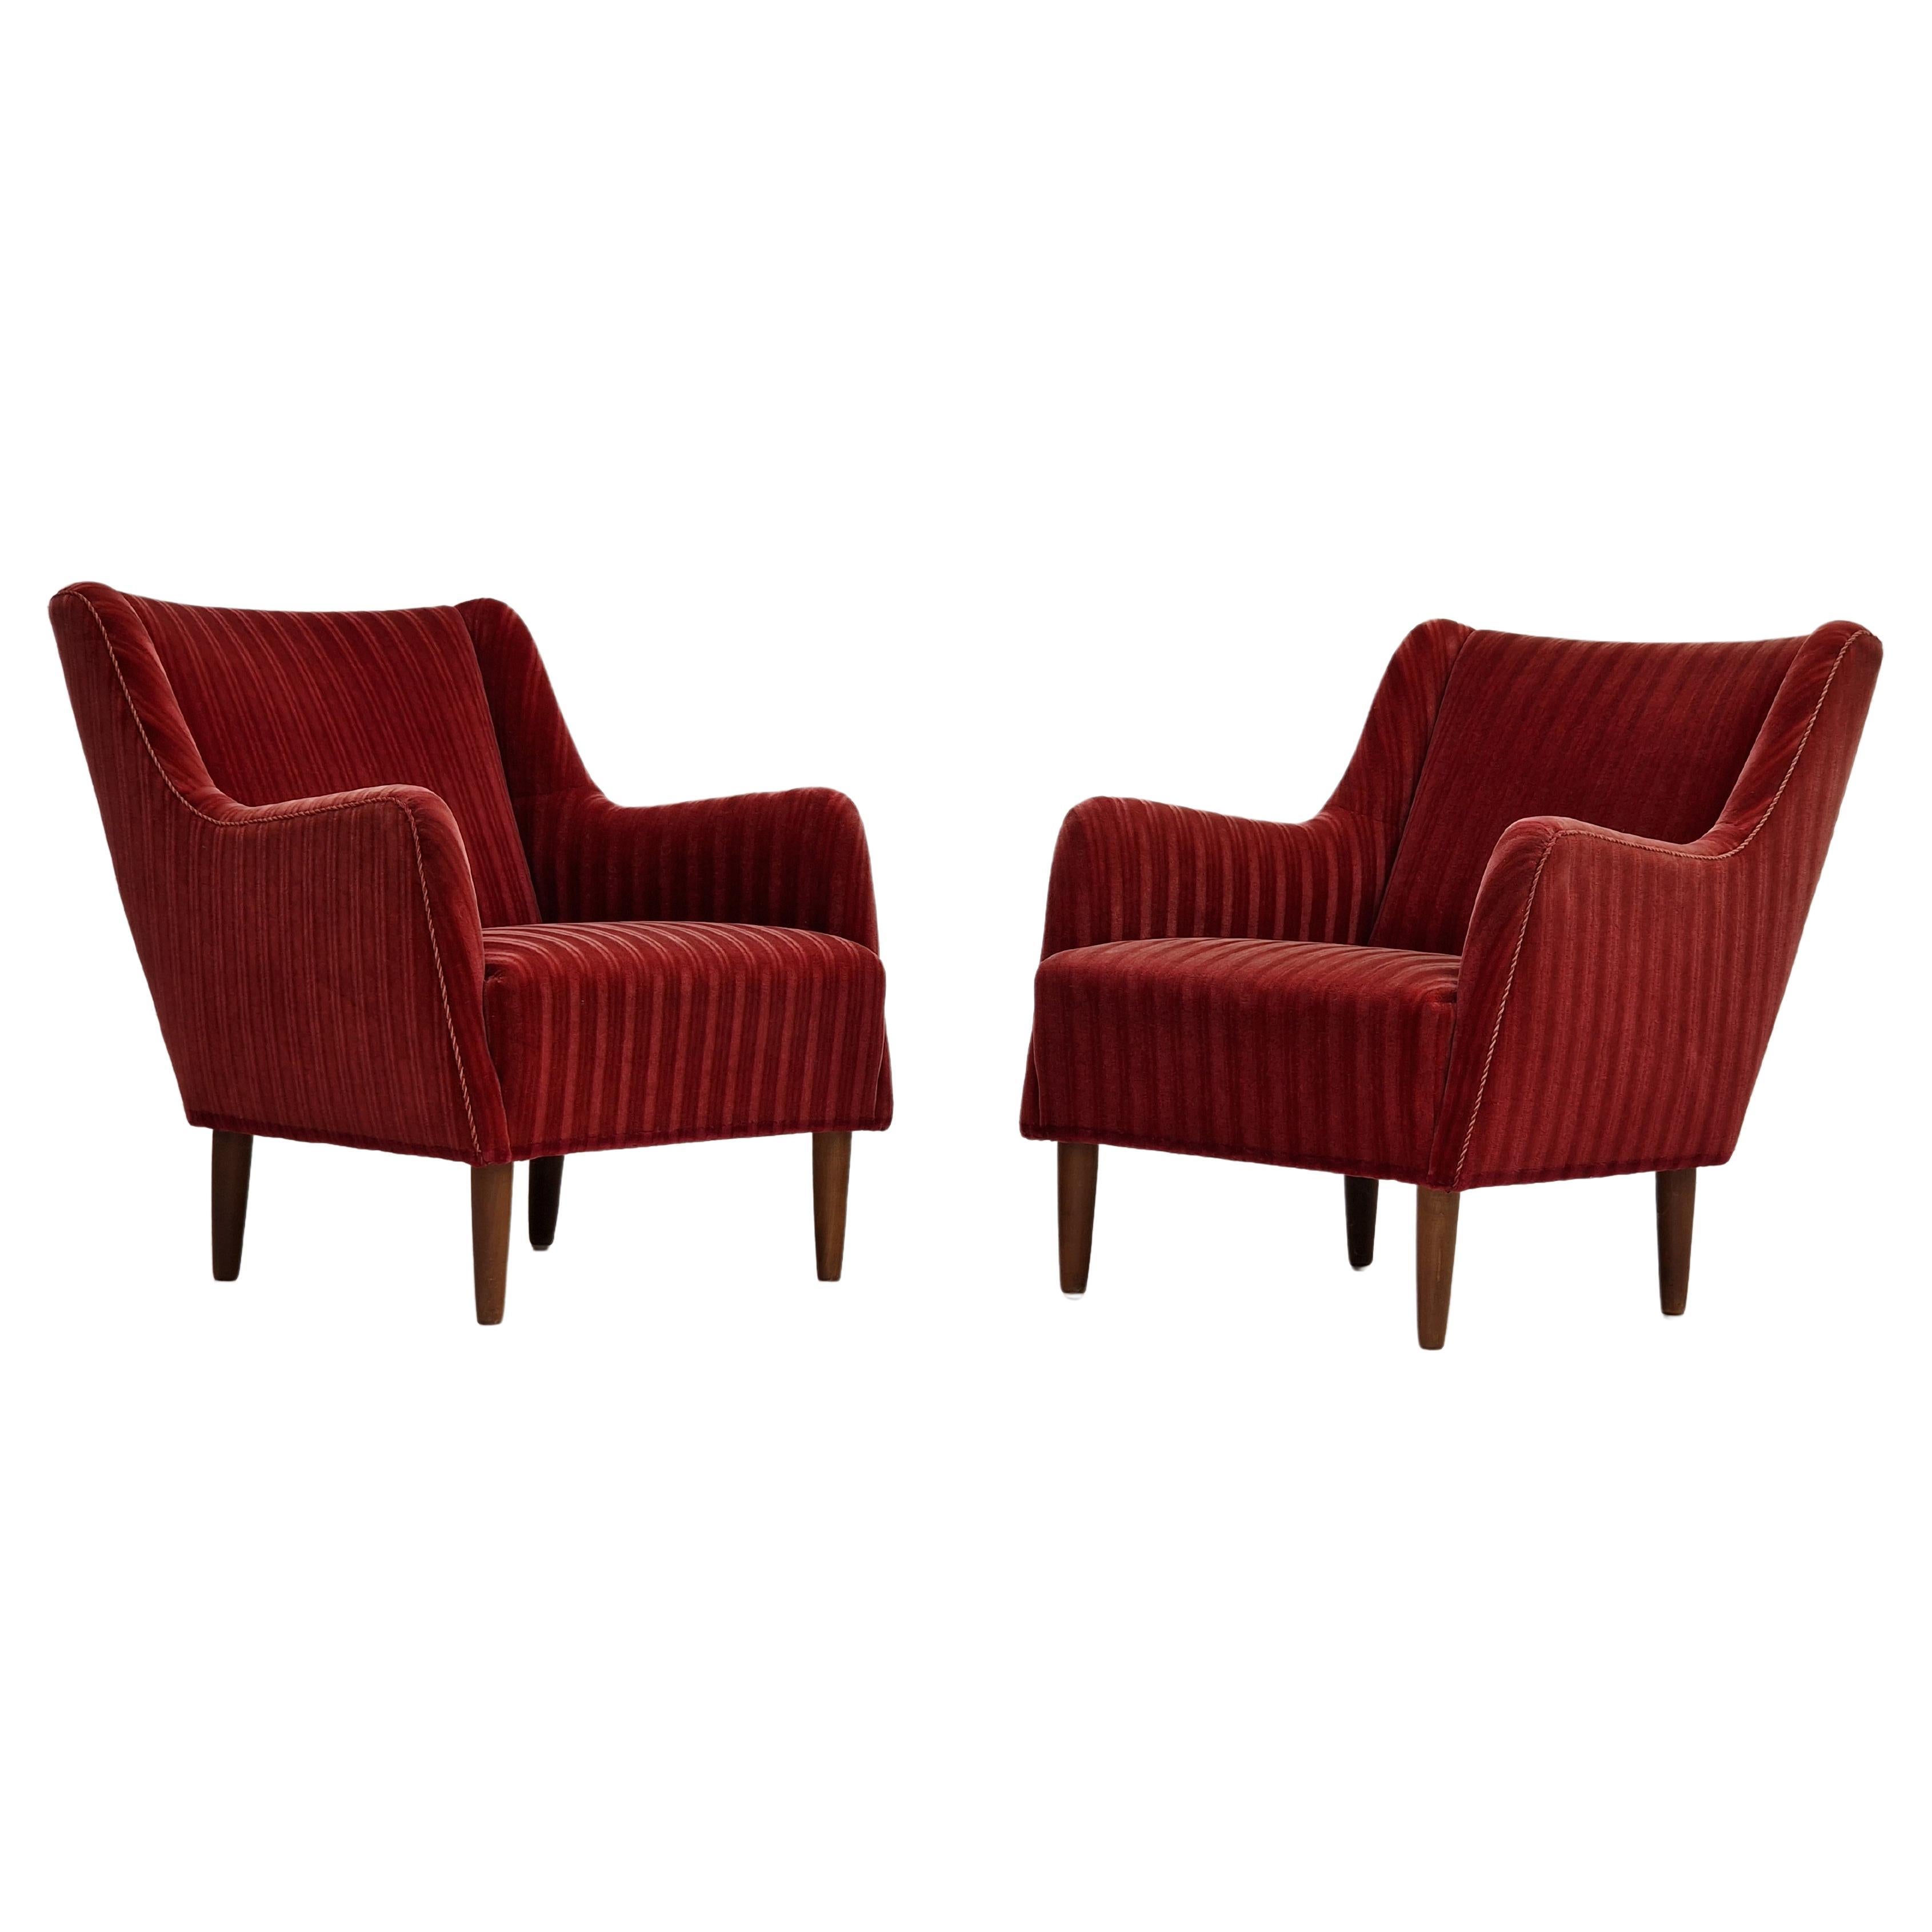 1960s, Danish Design, Set of 2 Armchairs, Velour, Original Very Good Condition